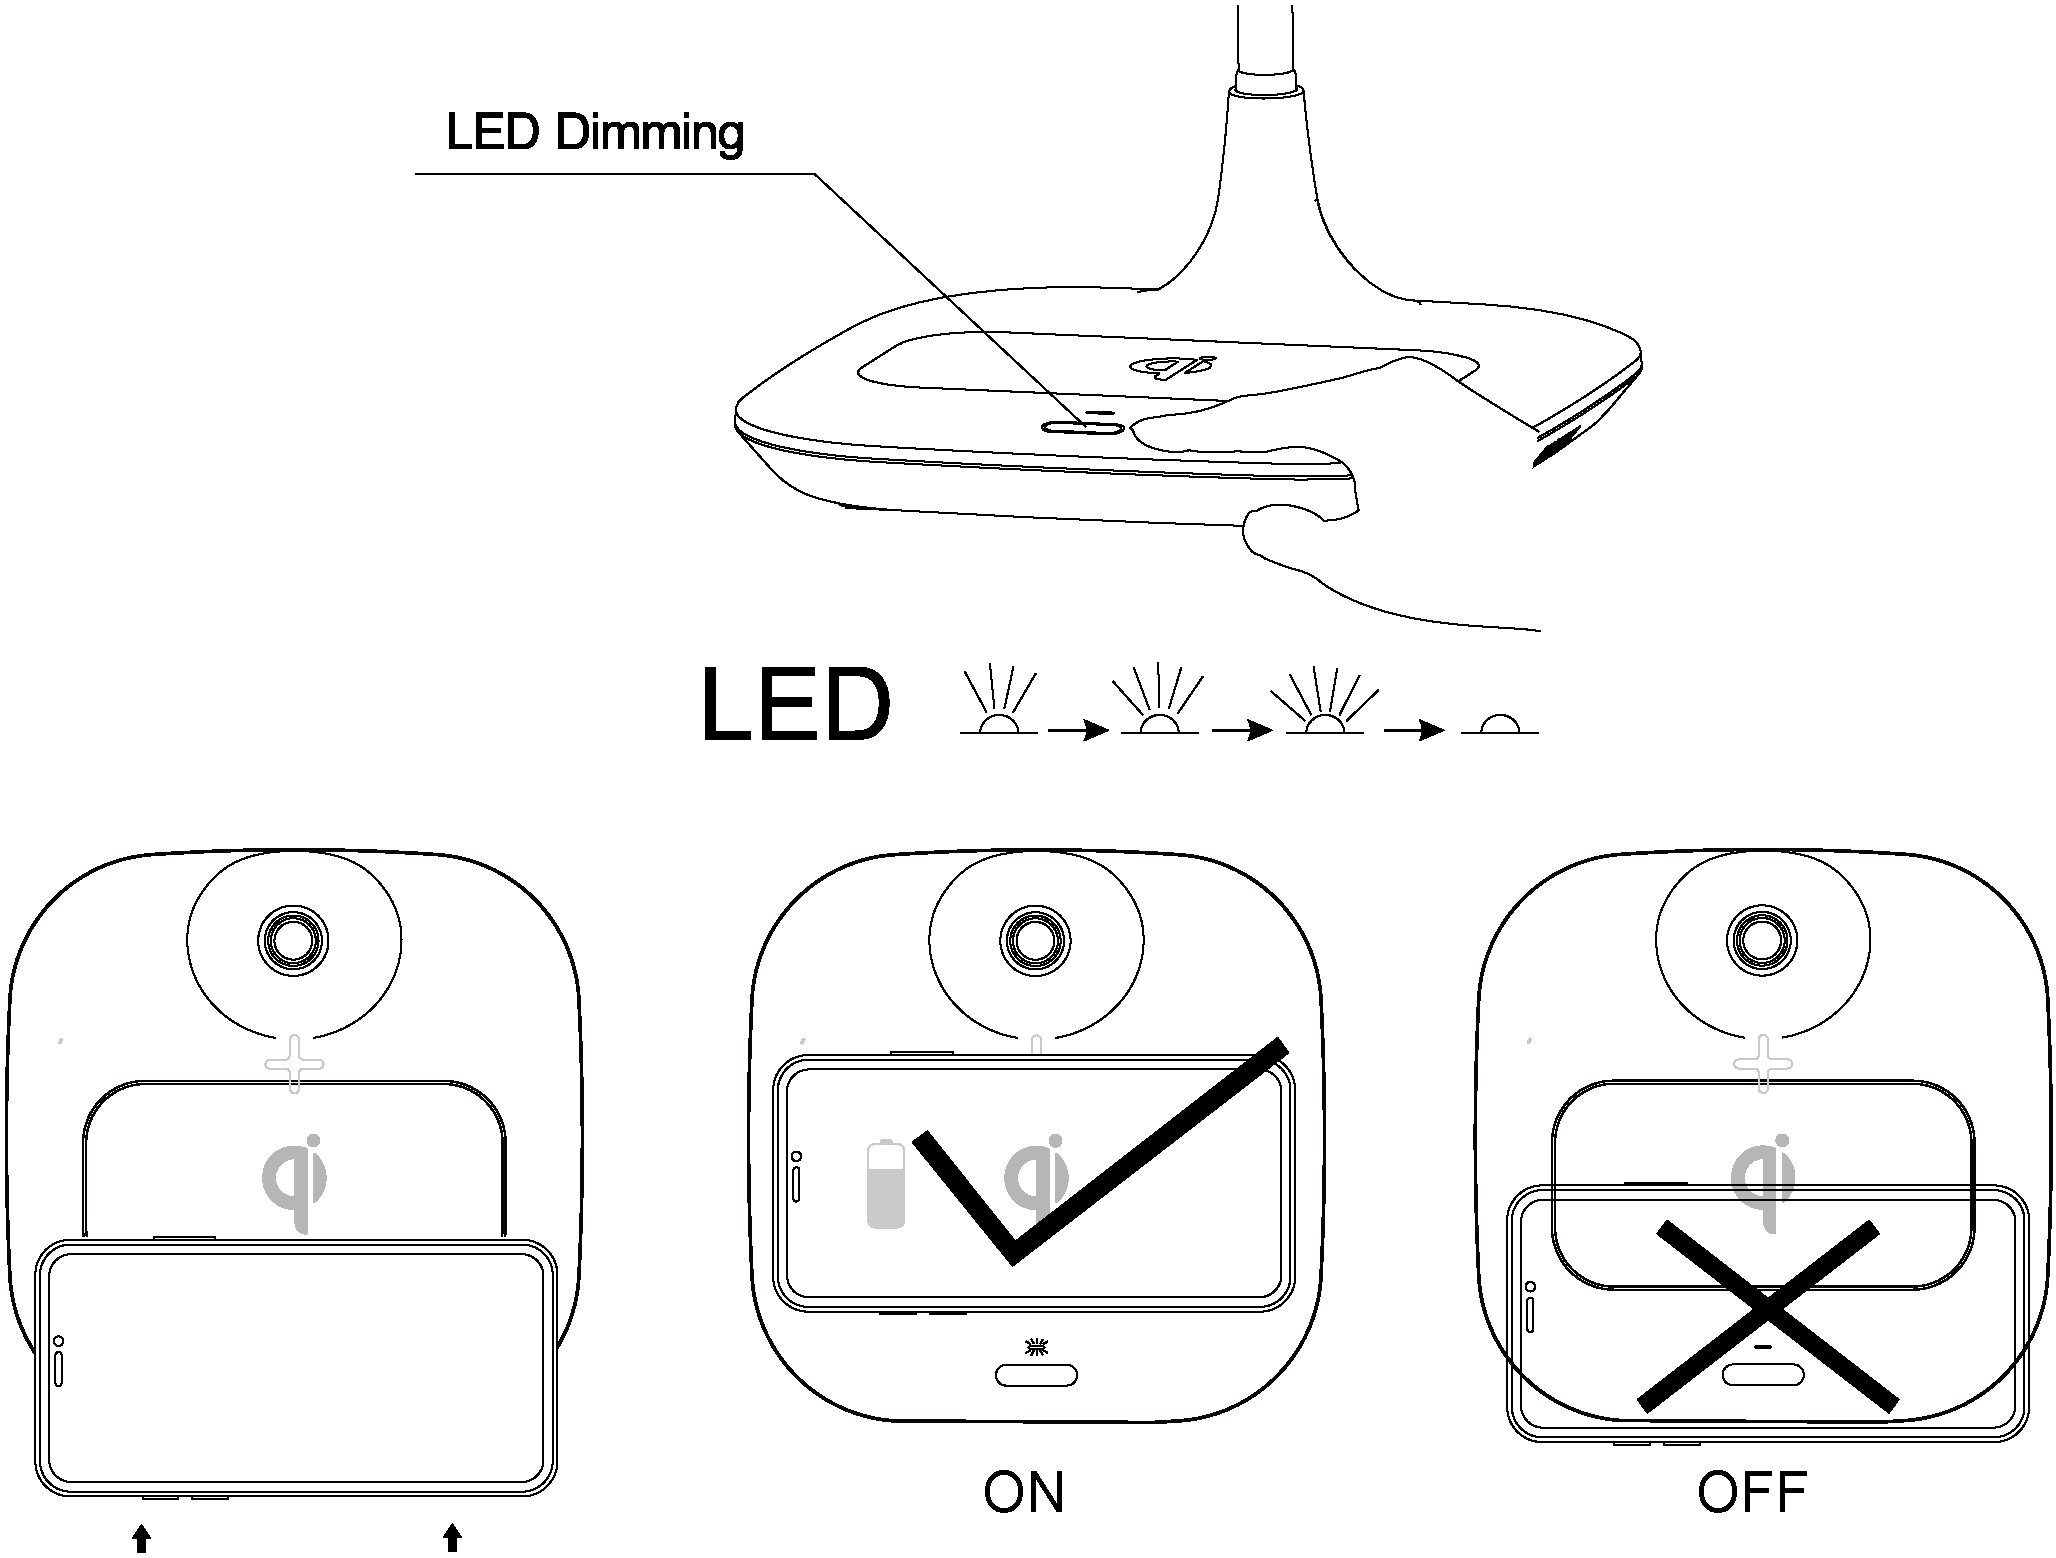 EGLO Tischleuchte MASSERIE, QI-charger 3-step LED Dimmfunktion, Neutralweiß, fest dimming, integriert